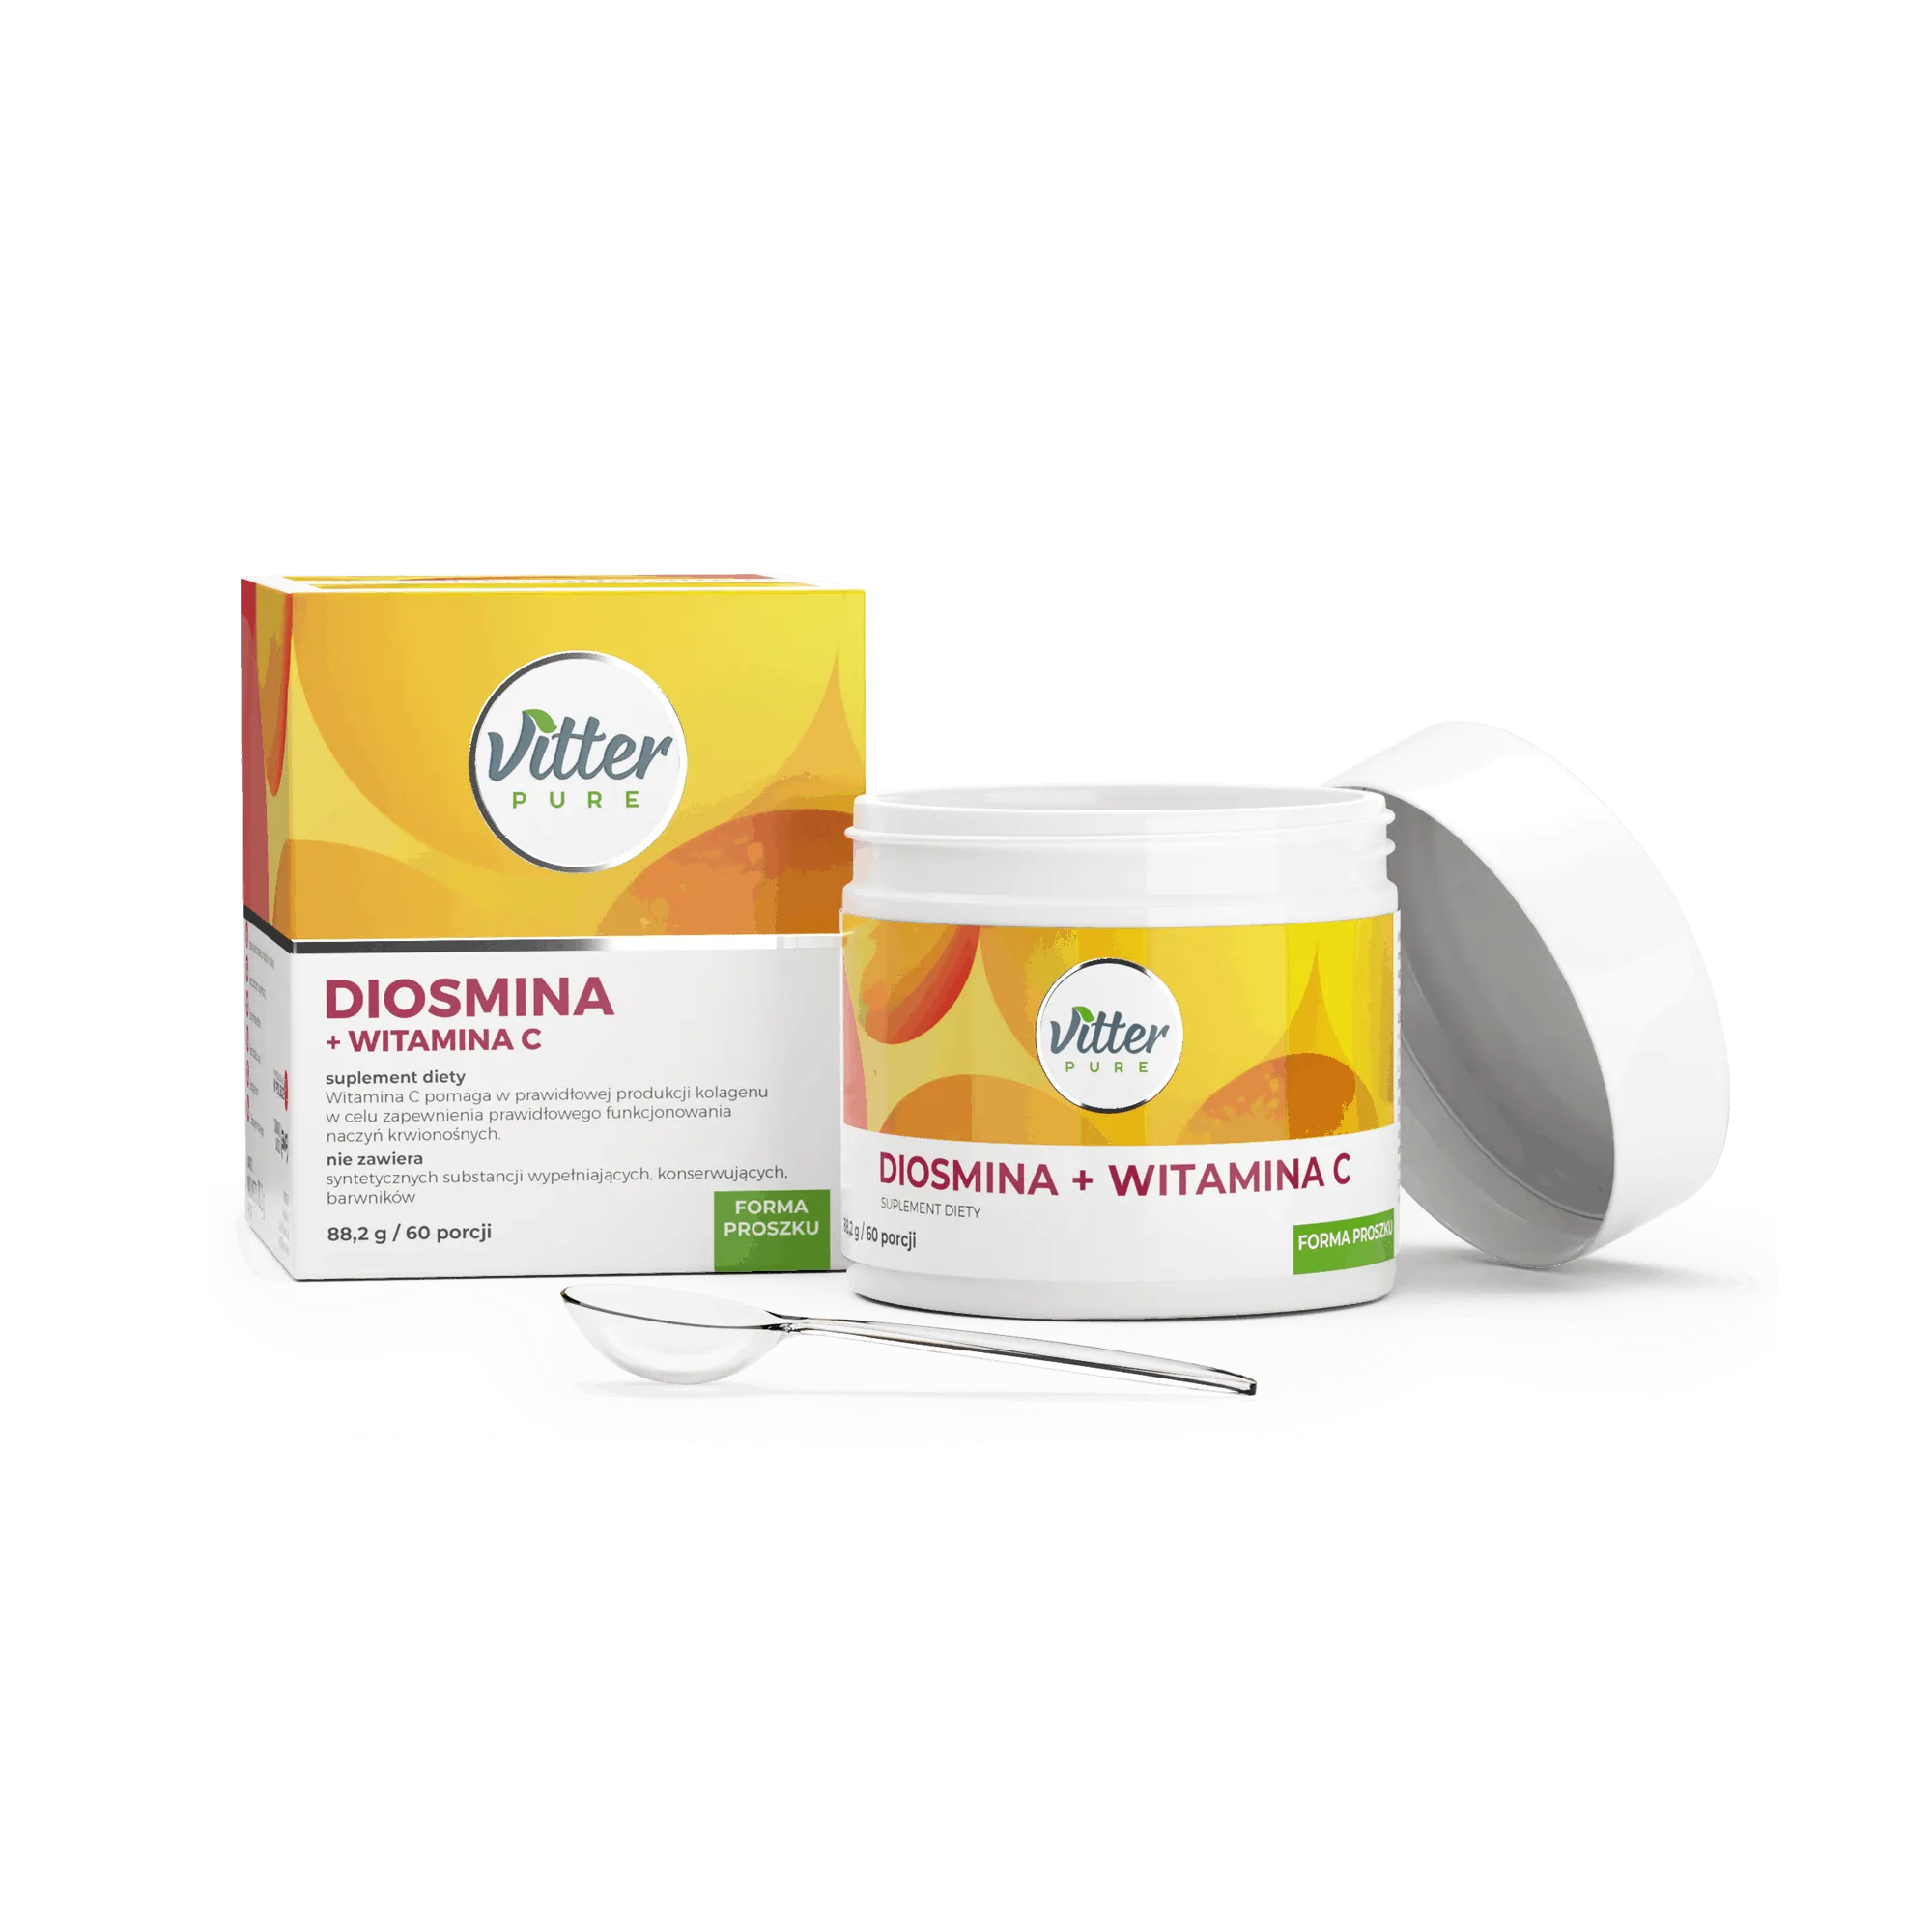 Diosmina + Witamina C Vitter Pure, suplement diety, proszek, 88,2 g